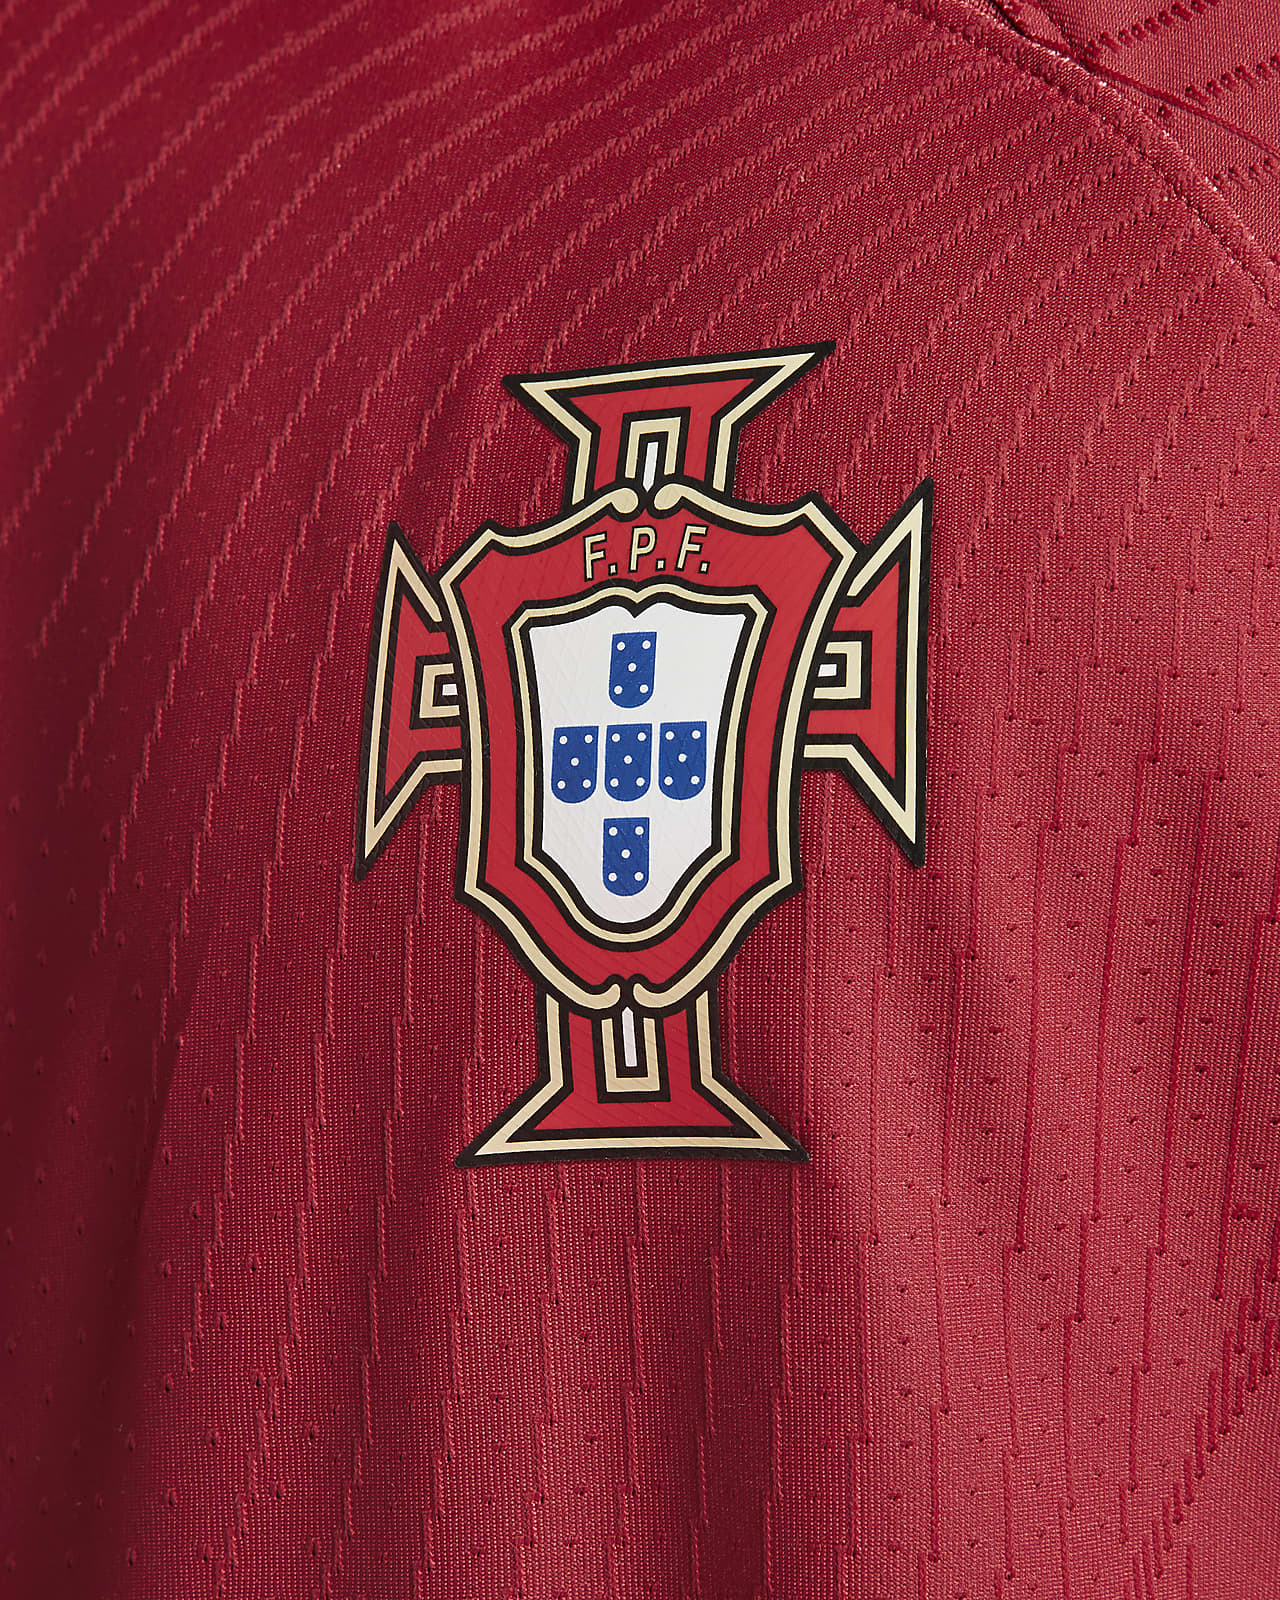 NIKE Camiseta Selección Portugal - Rojo - Camiseta Fútbol Hombre 